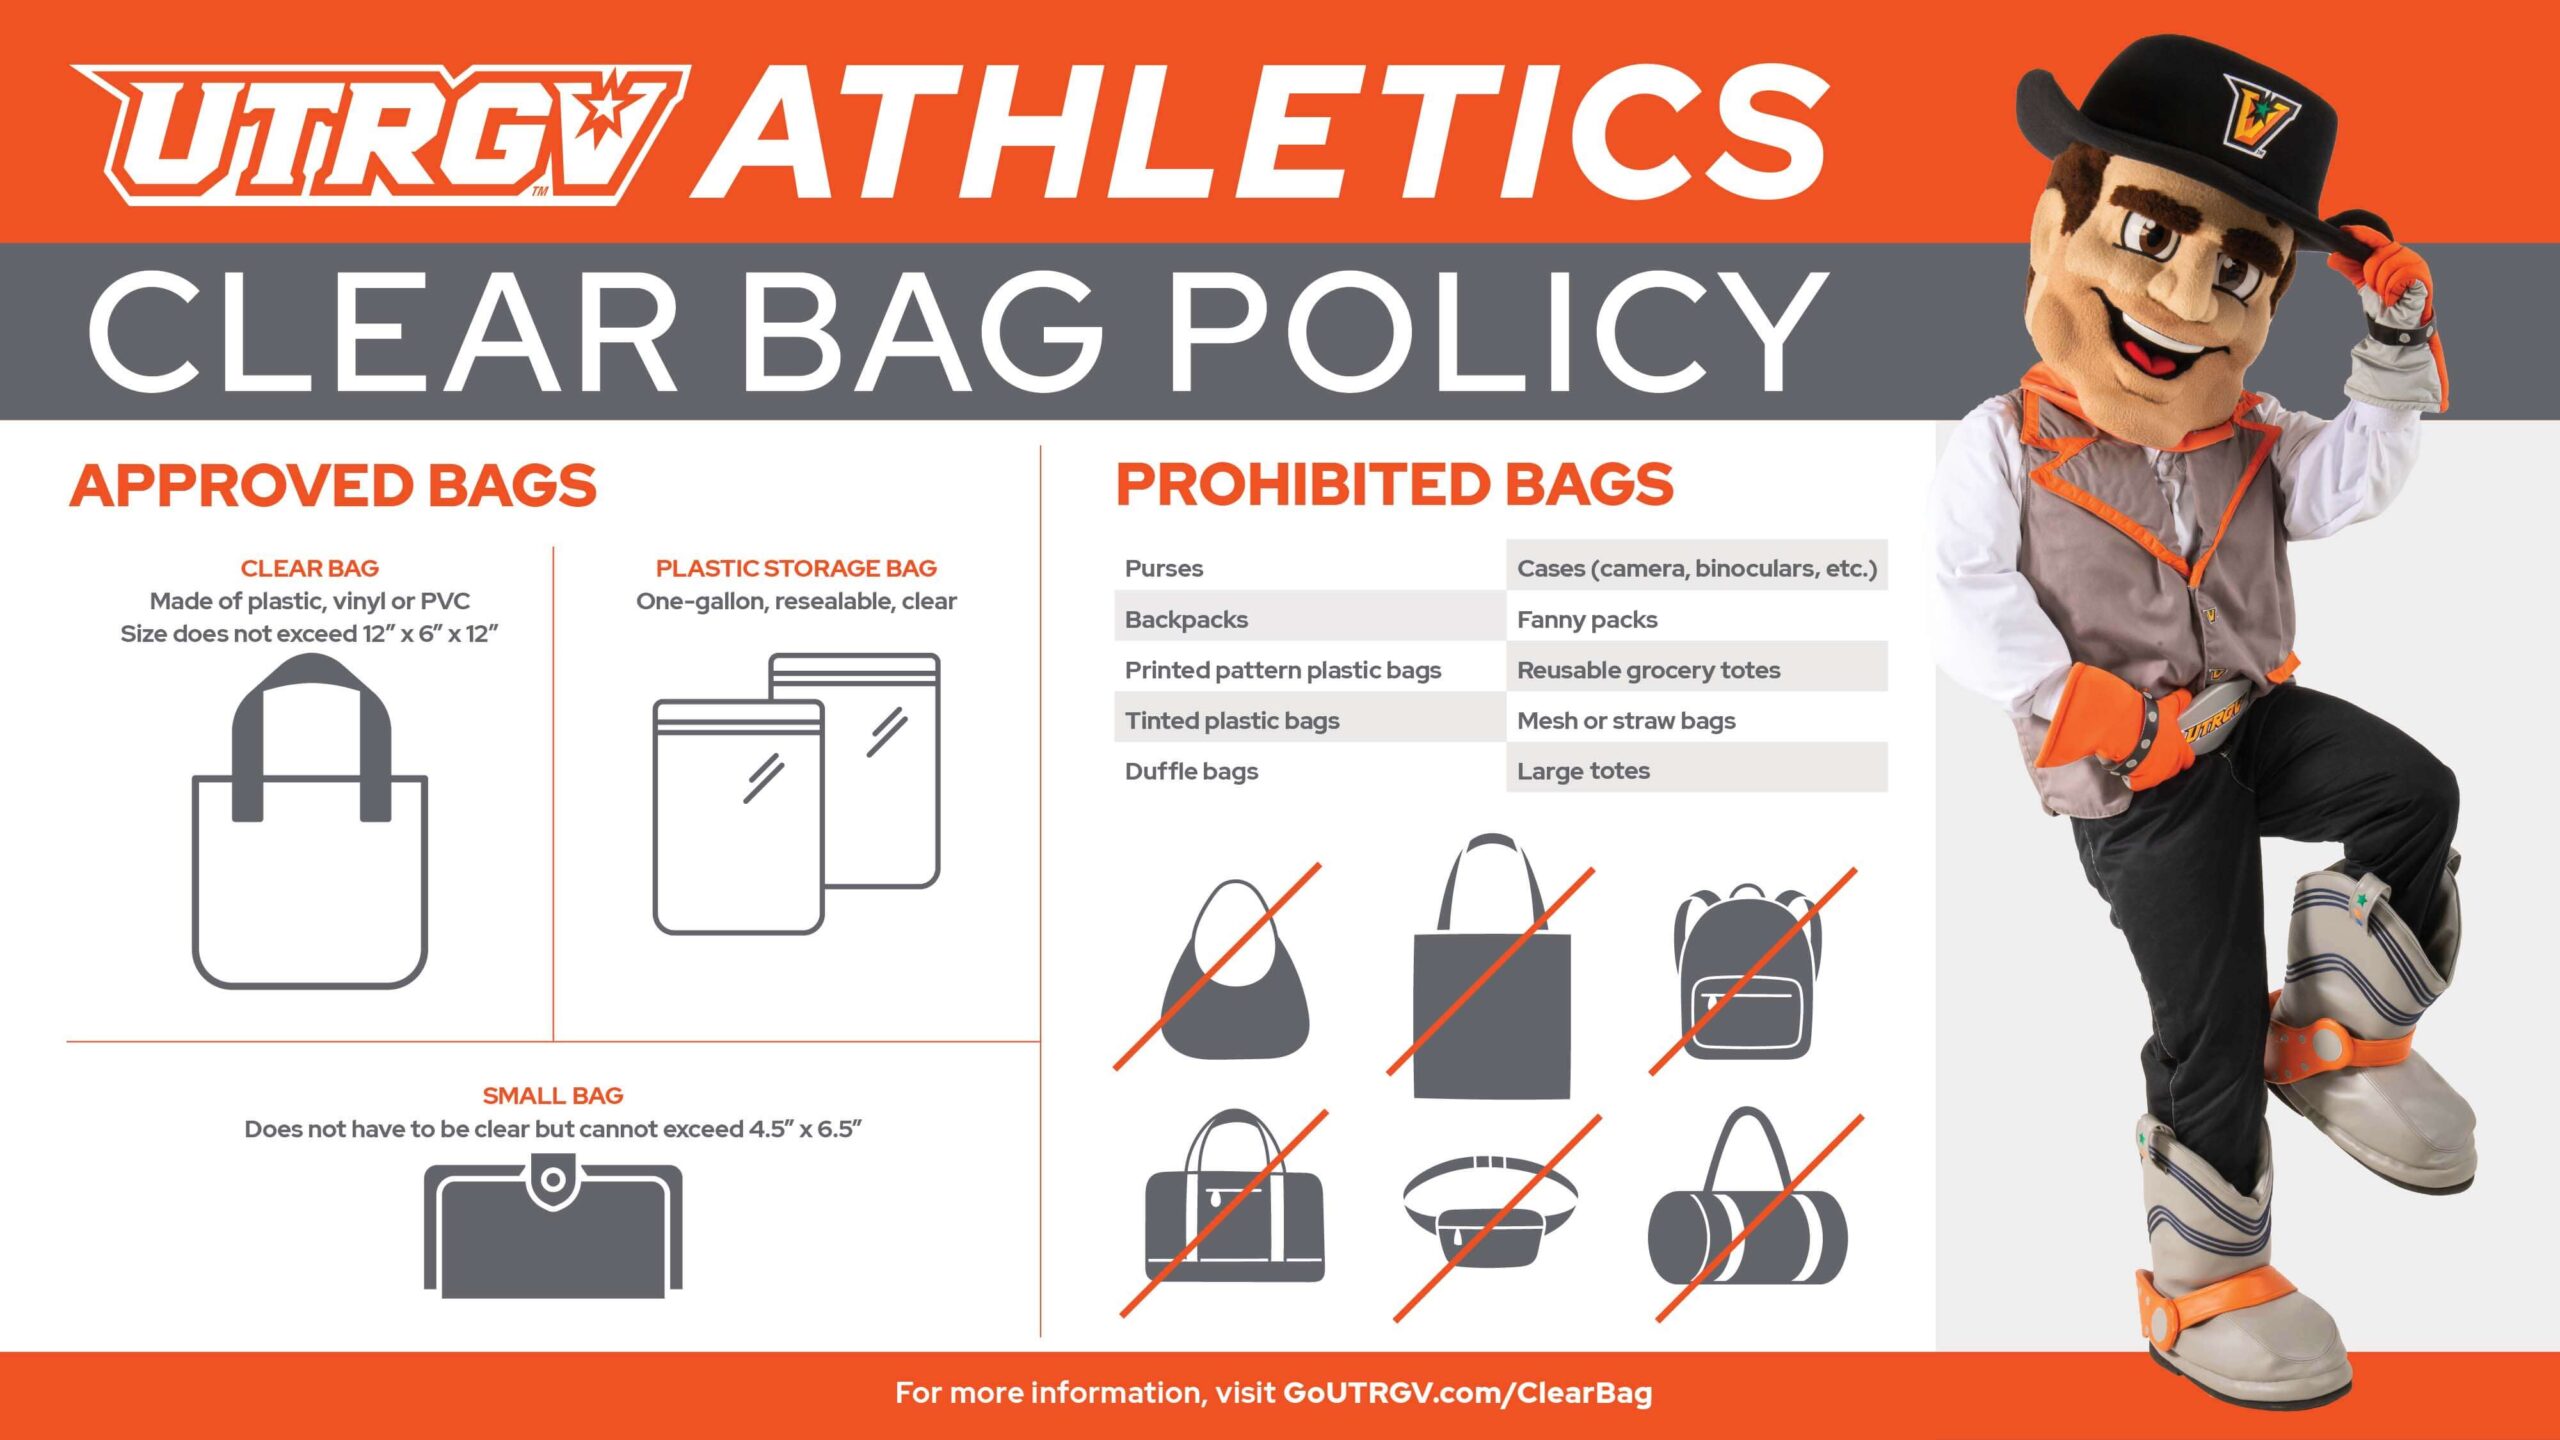 Athletics Announces Clear Bag Policy - Texas Border Business